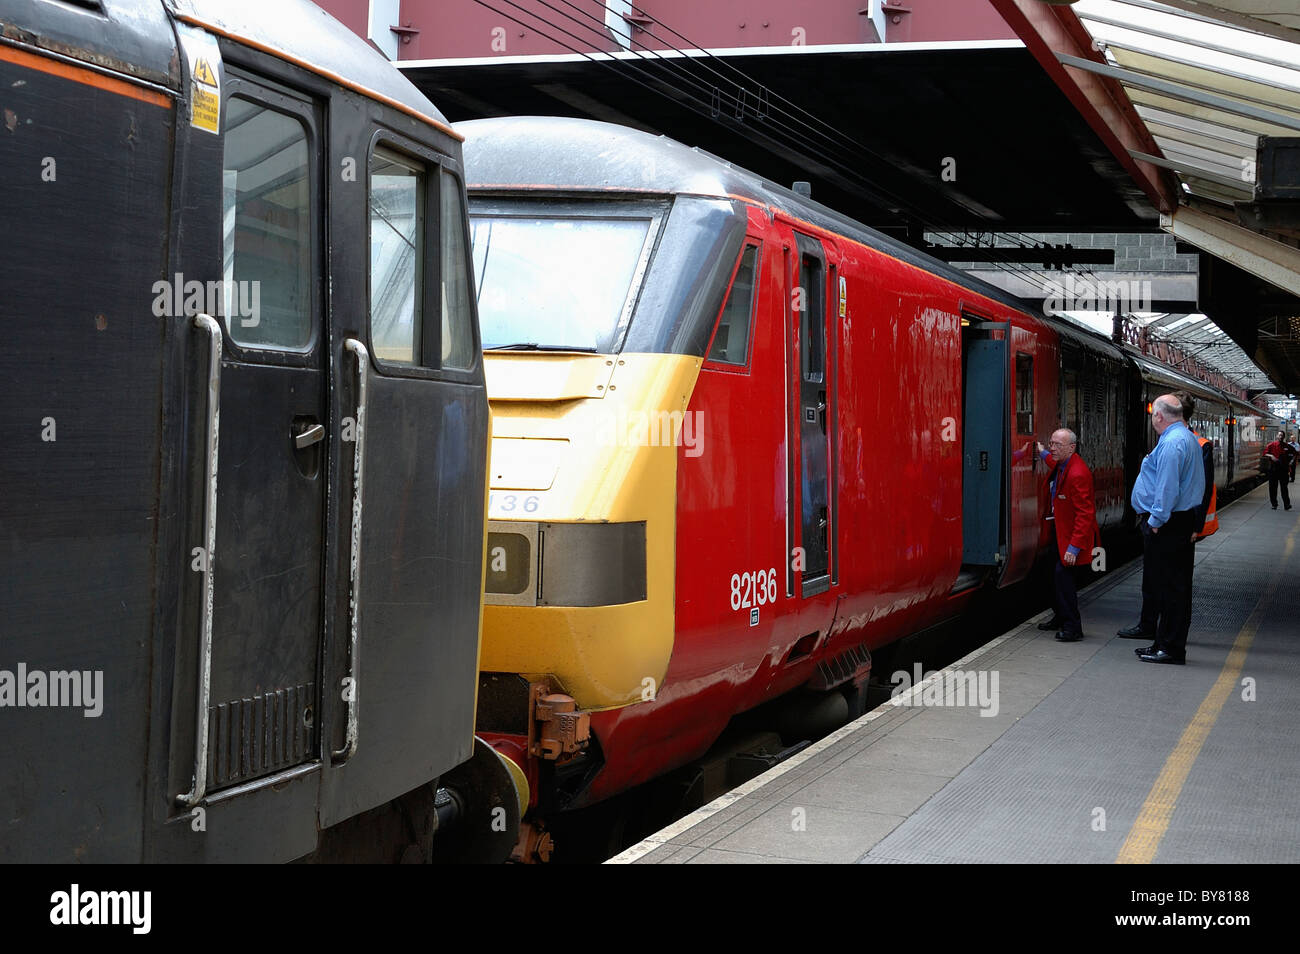 Virgin Trains 82136 à la gare de Crewe angleterre uk Banque D'Images